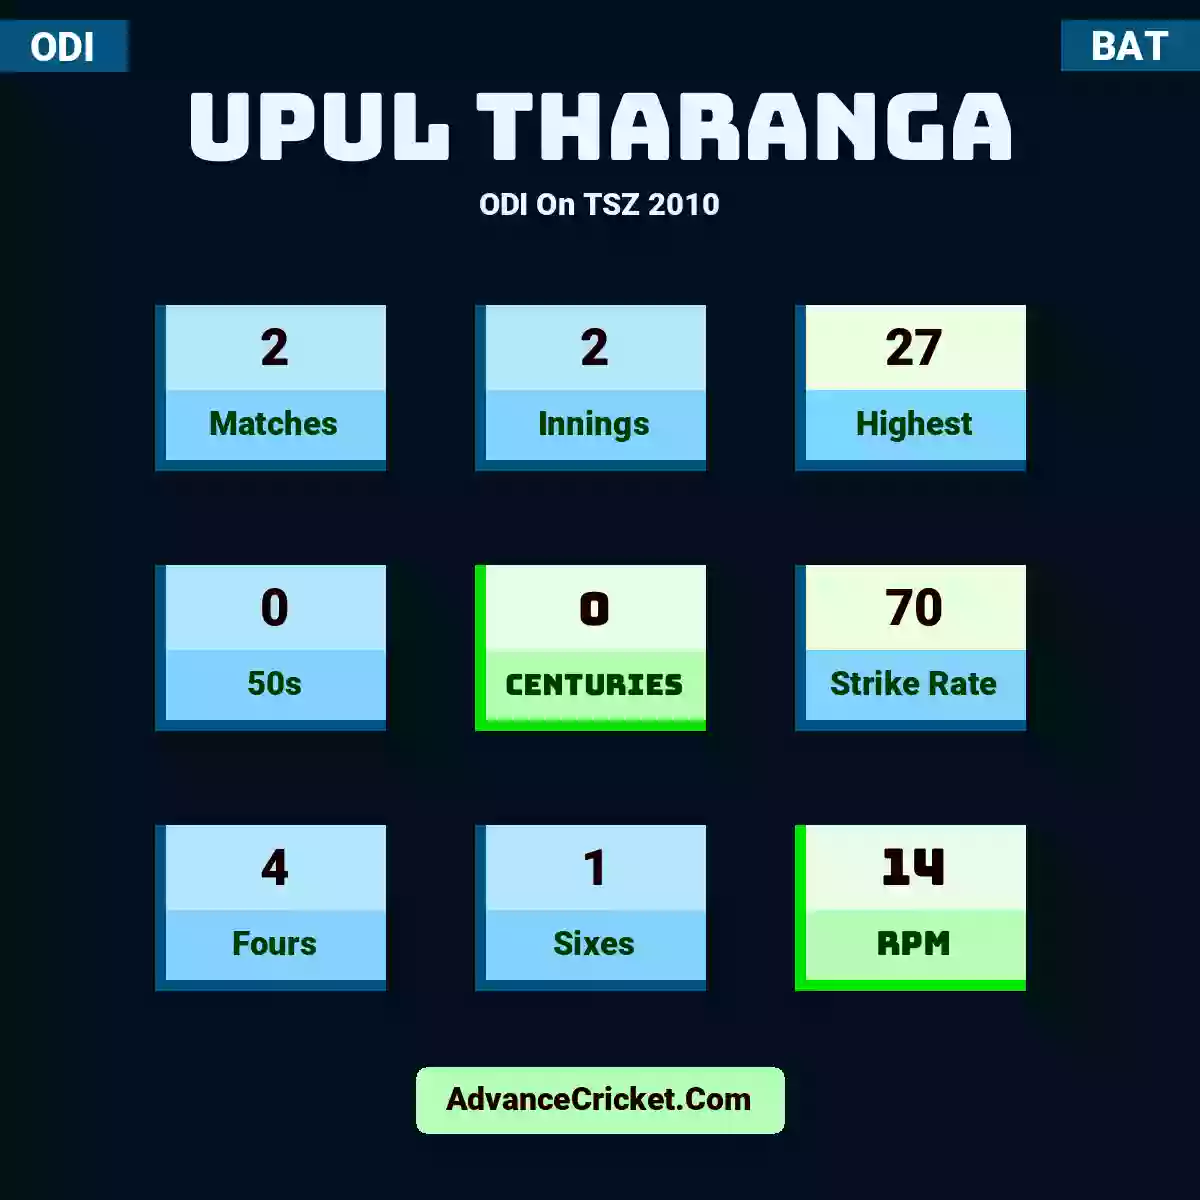 Upul Tharanga ODI  On TSZ 2010, Upul Tharanga played 2 matches, scored 27 runs as highest, 0 half-centuries, and 0 centuries, with a strike rate of 70. U.Tharanga hit 4 fours and 1 sixes, with an RPM of 14.